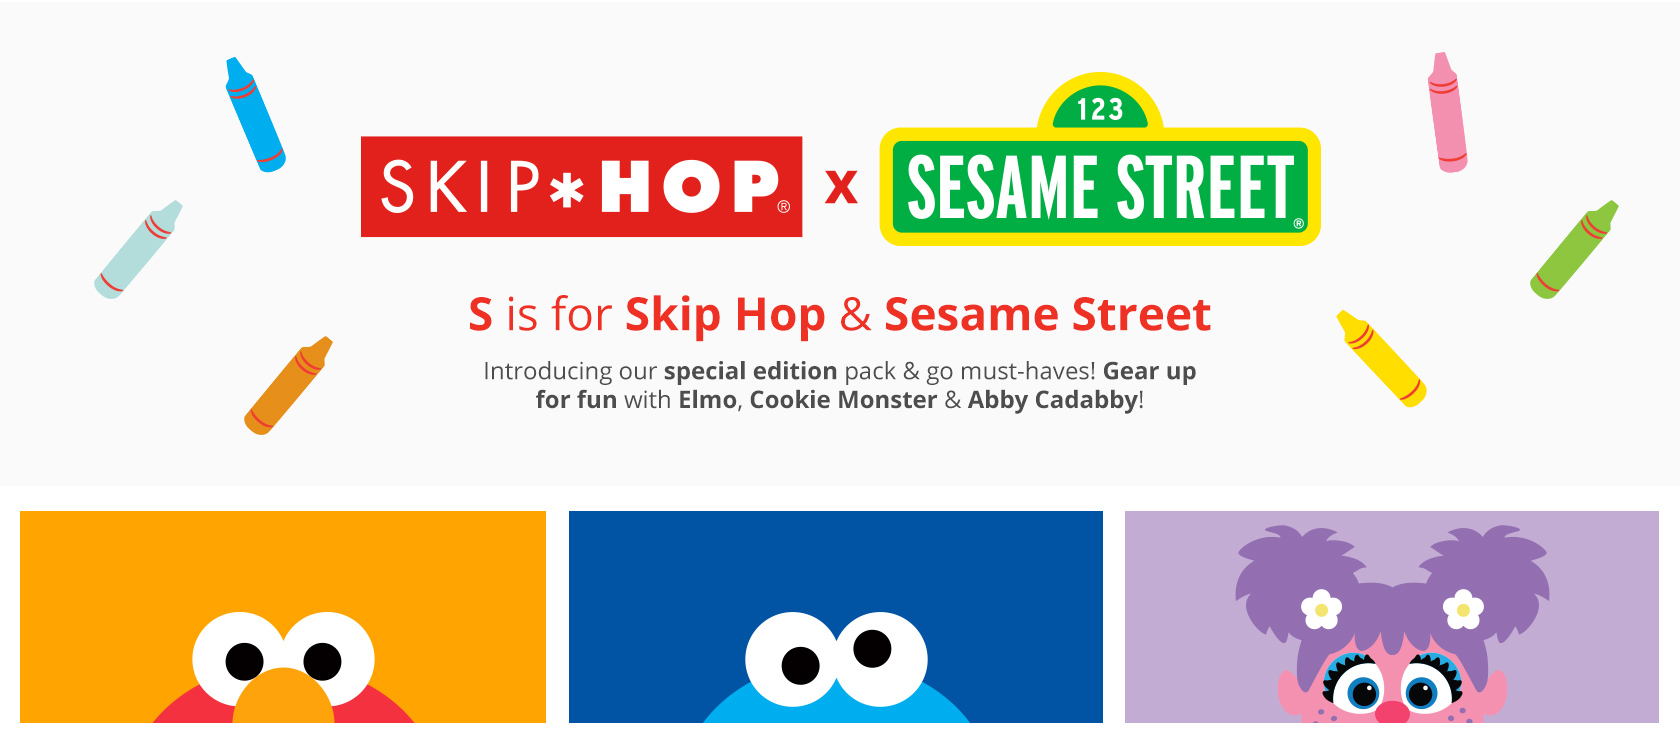 Skiphop x Sesame Street